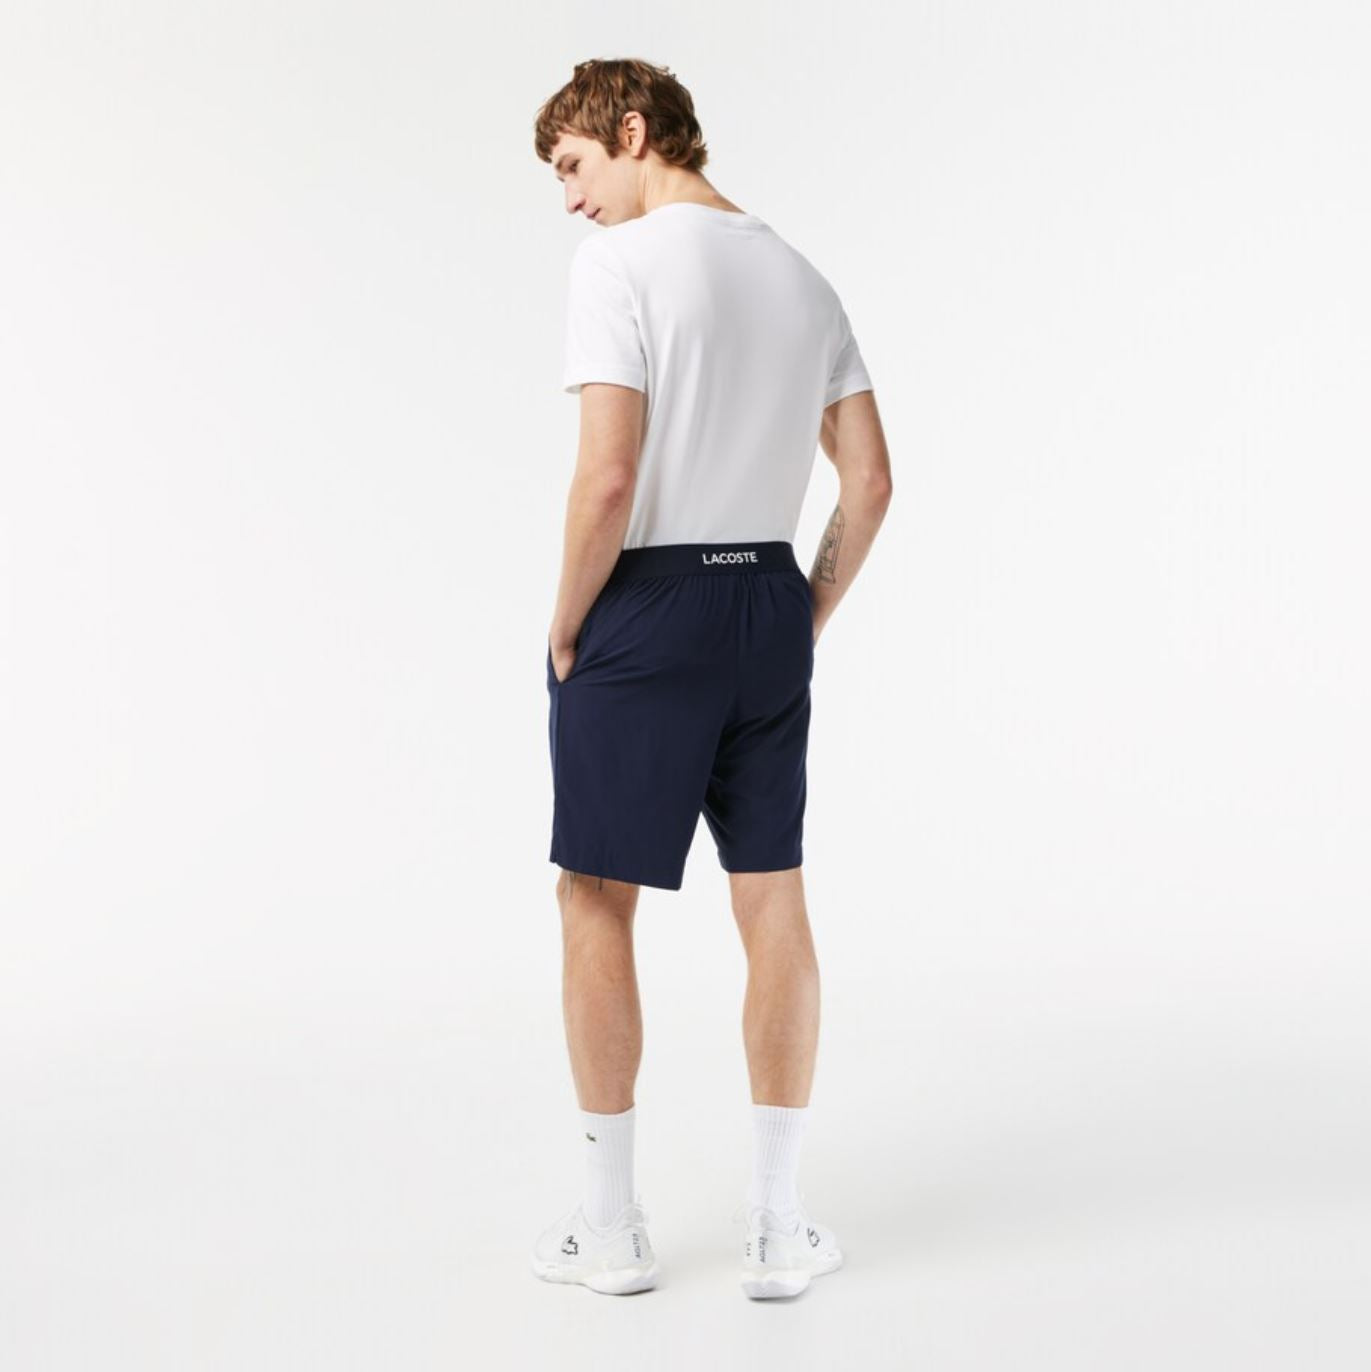 Lacoste Shorts (Navy)